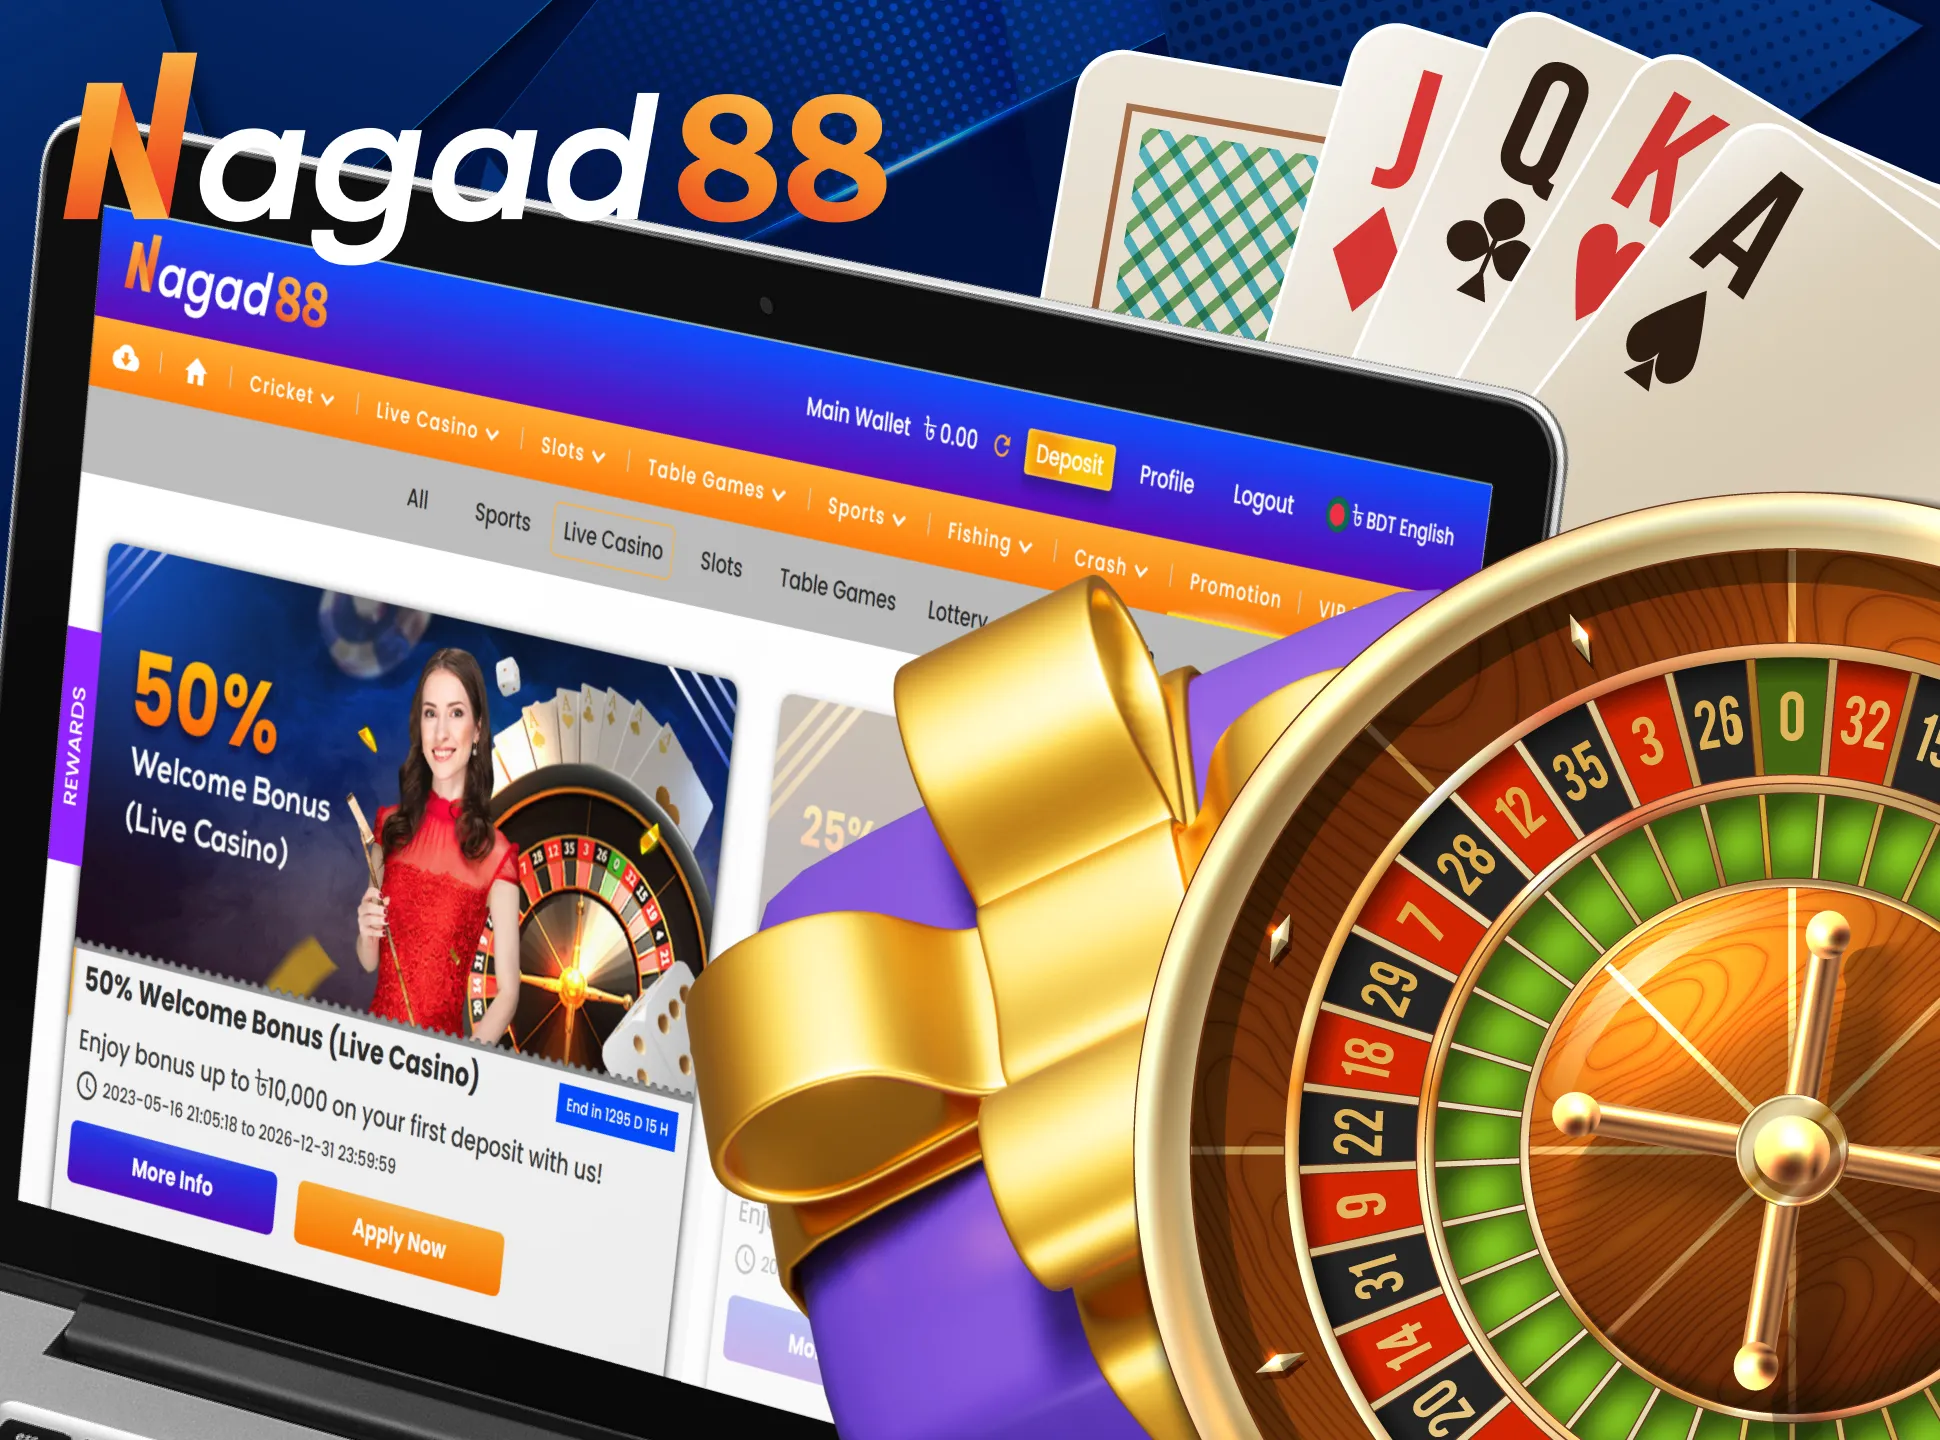 Take advantage of the welcome live casino bonus from Nagad88.